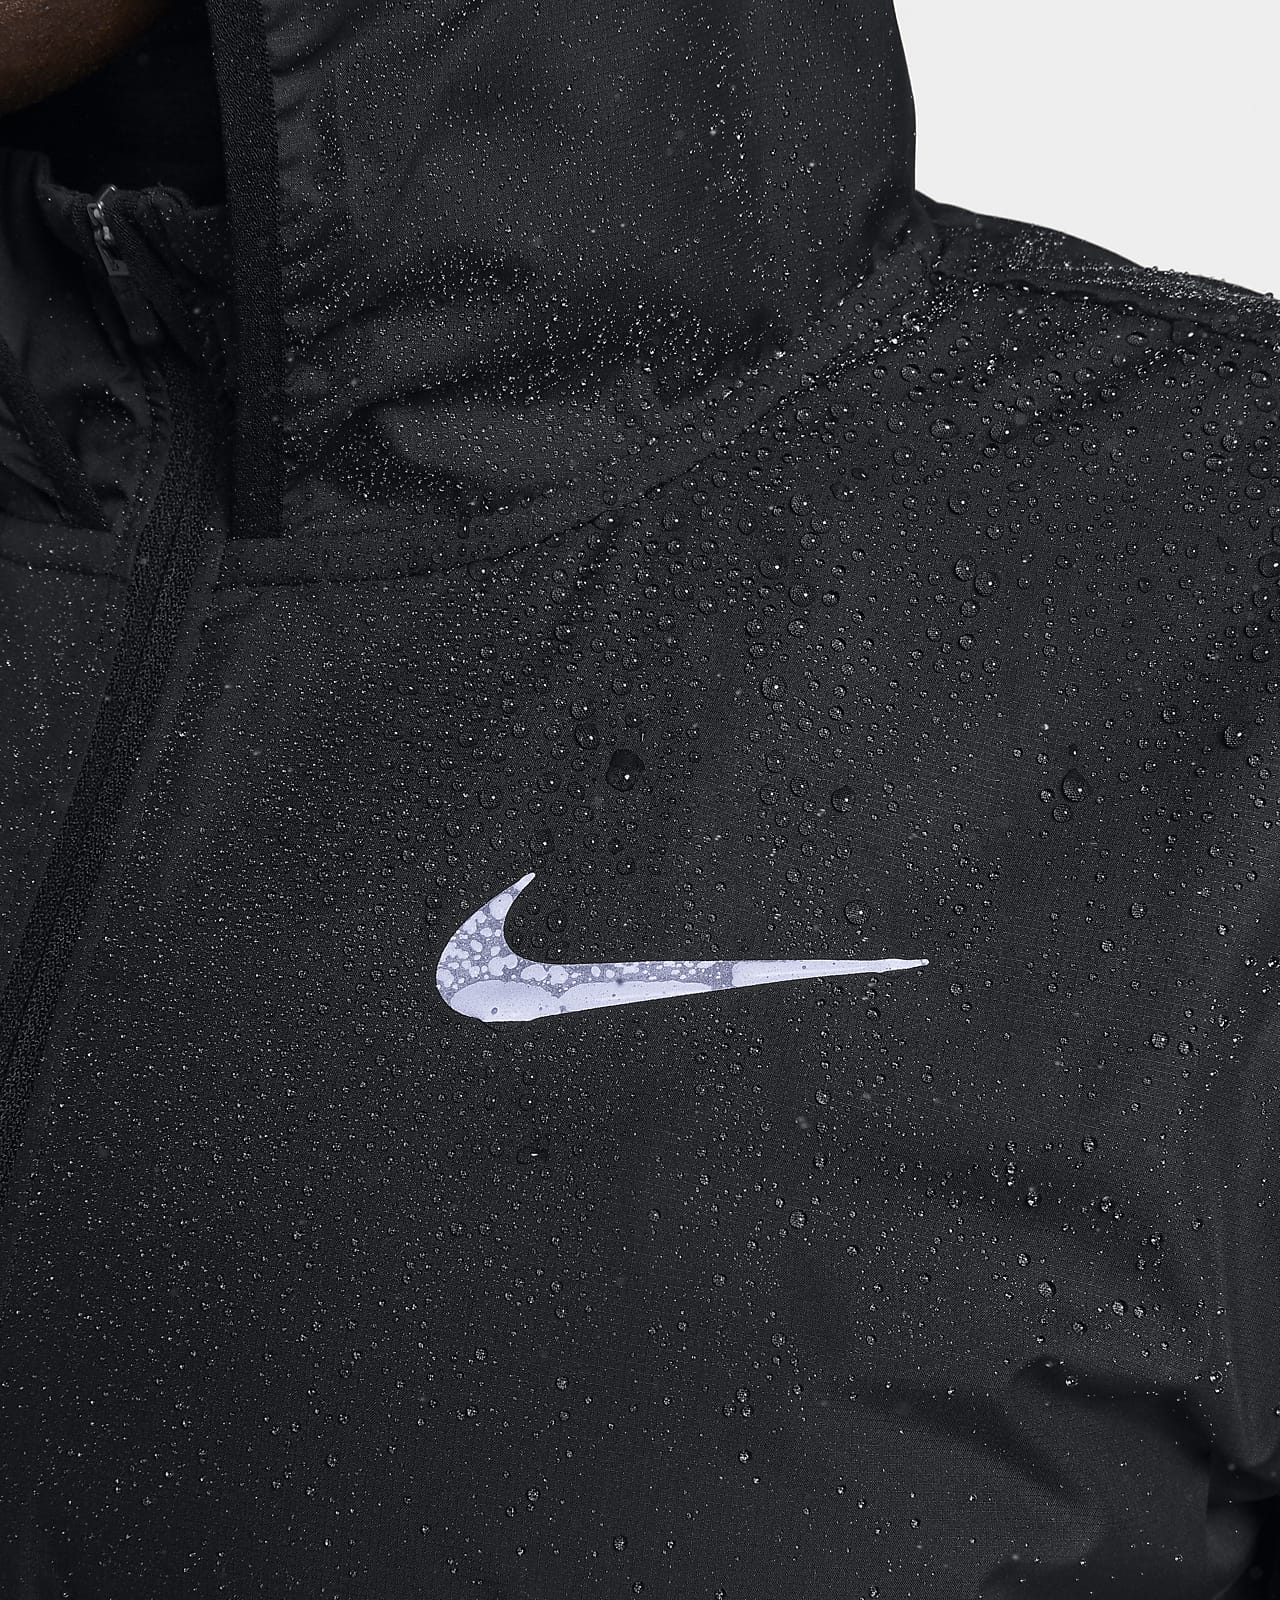 Running Rain Jacket. Nike ID